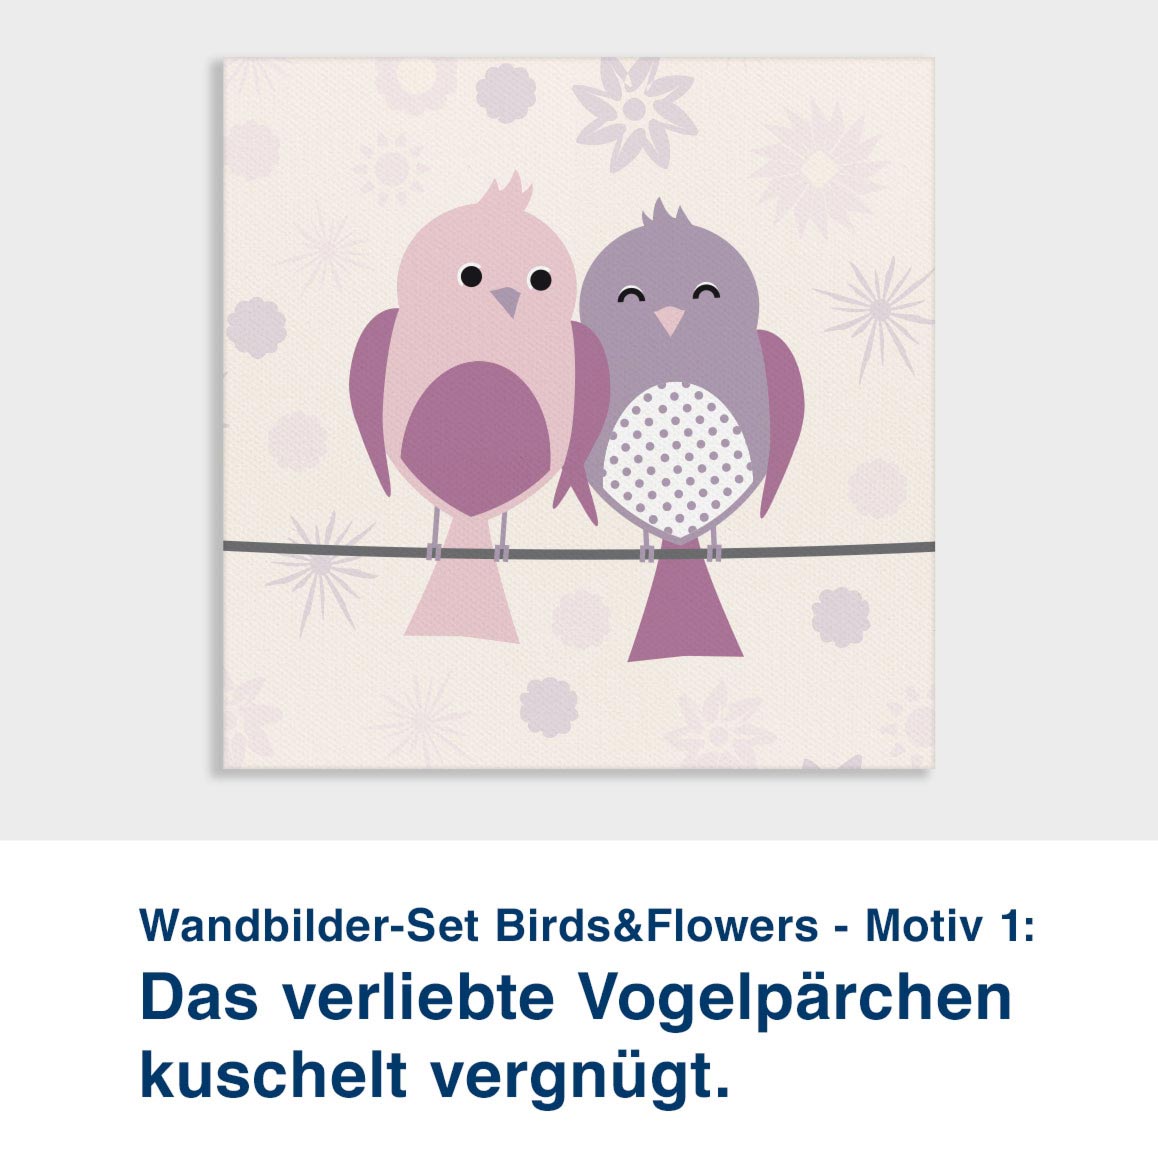 Wandbilder-Set Birds&Flowers - Motiv 1:  Das verliebte Vogelpärchen  kuschelt vergnügt.